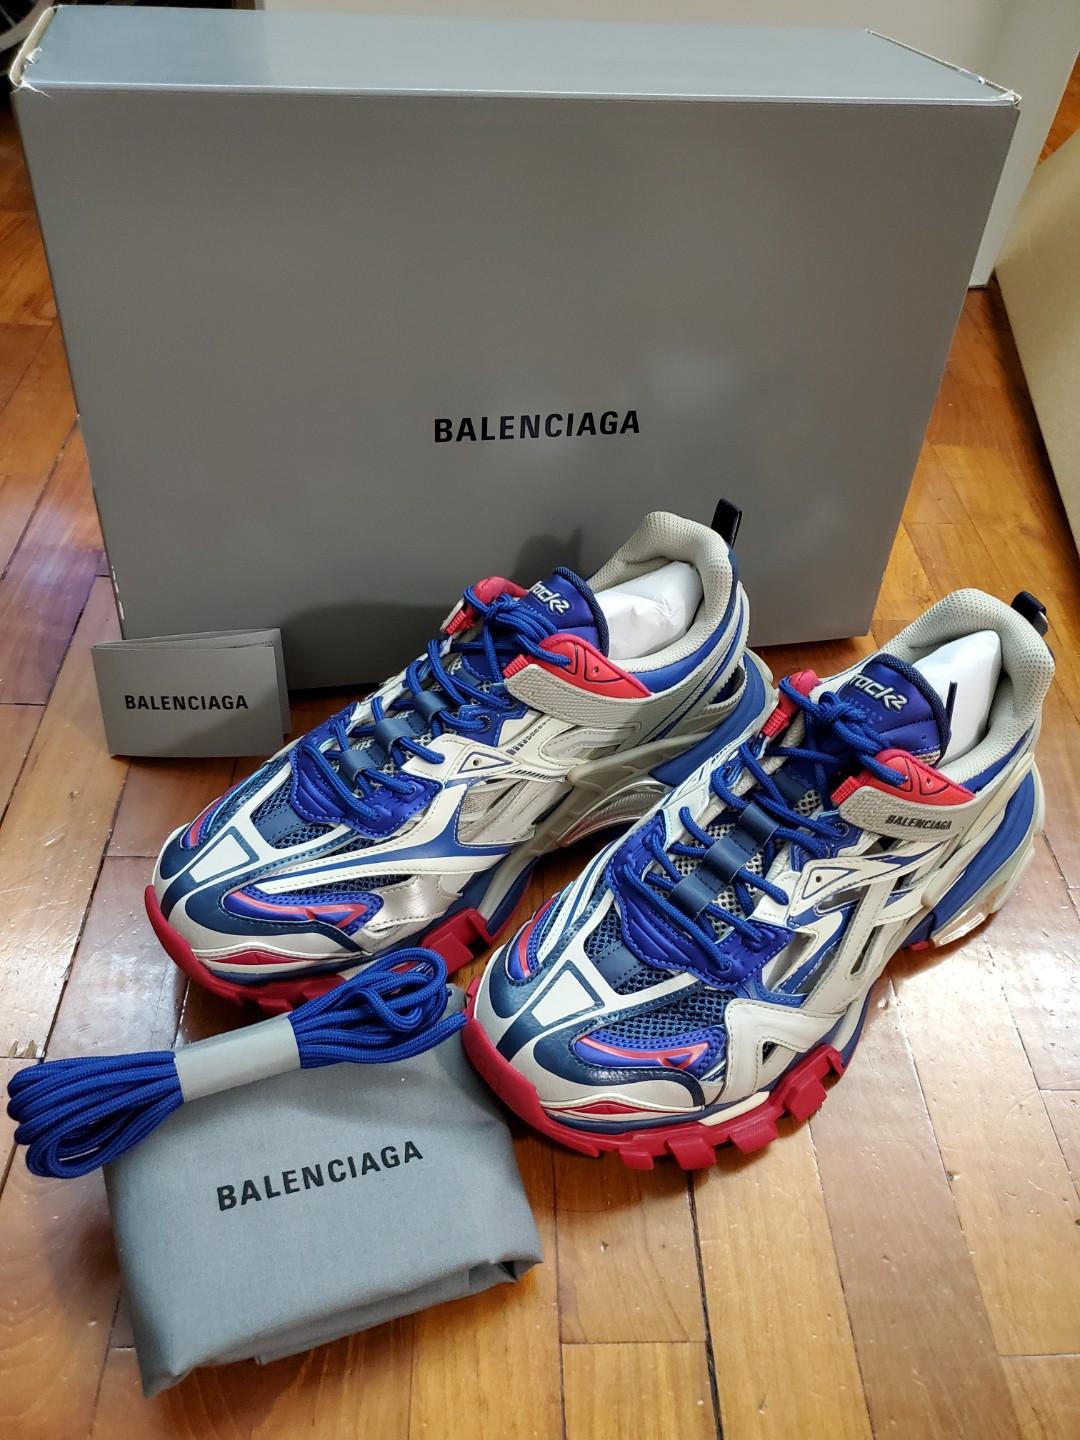 Balenciaga Shoes Track Trainers Shoe Poshmark